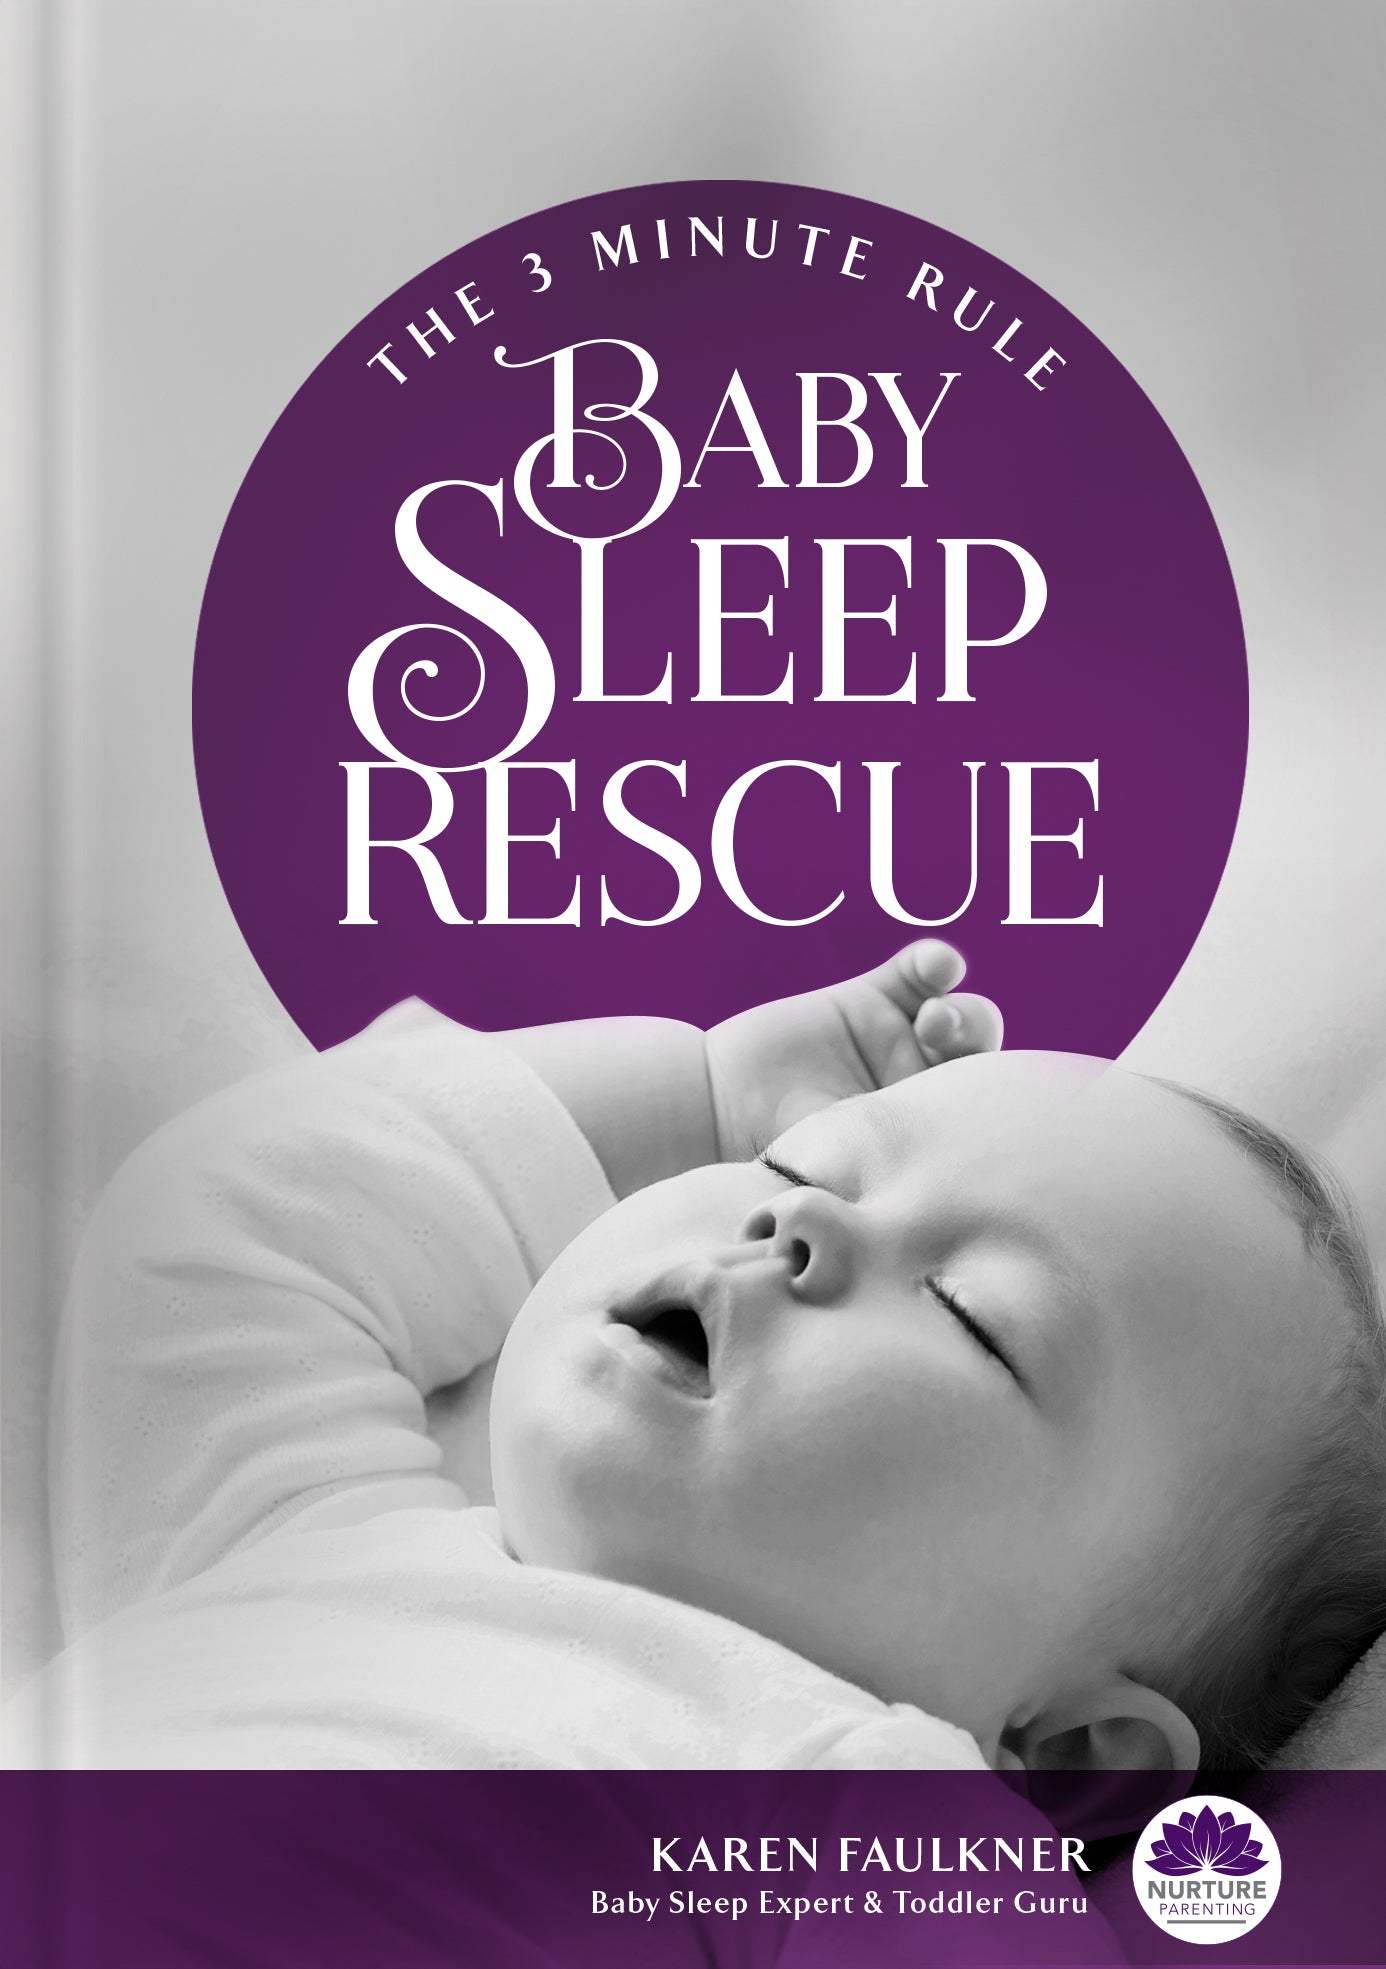 Baby Sleep Rescue, baby sleep training, baby sleep help, nurture parenting, conscious parenting, baby sleep, wake windows, routines, schedules, day naps, cat naps